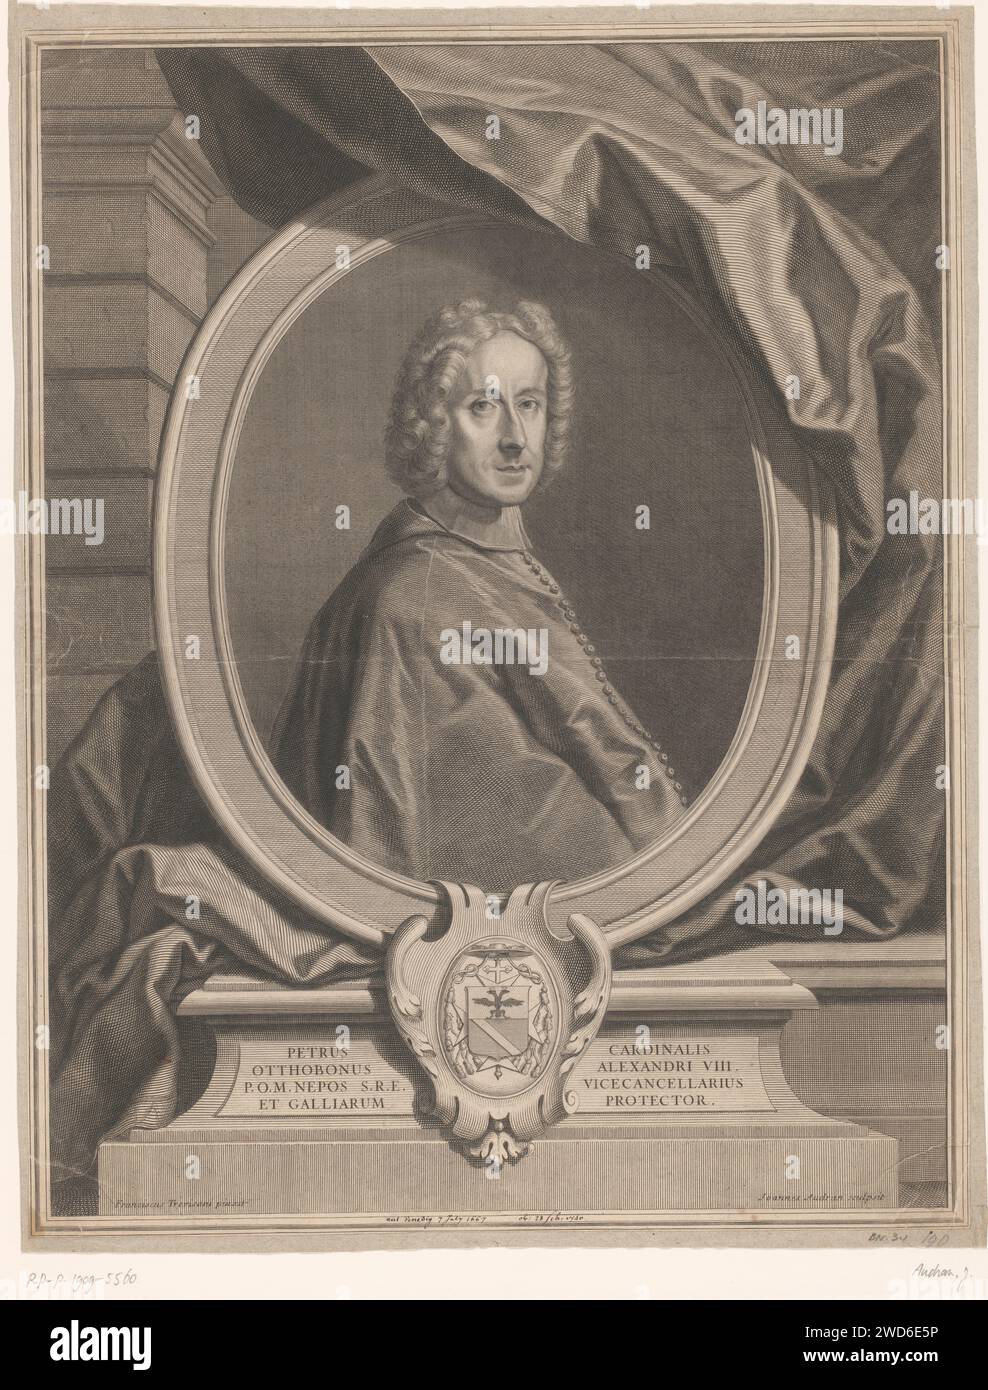 Porto portrepurt, Jean Audranà, after Francesco Trevisani, 1677 - 1756 print  France paper engraving / etching historical persons. cardinal Stock Photo